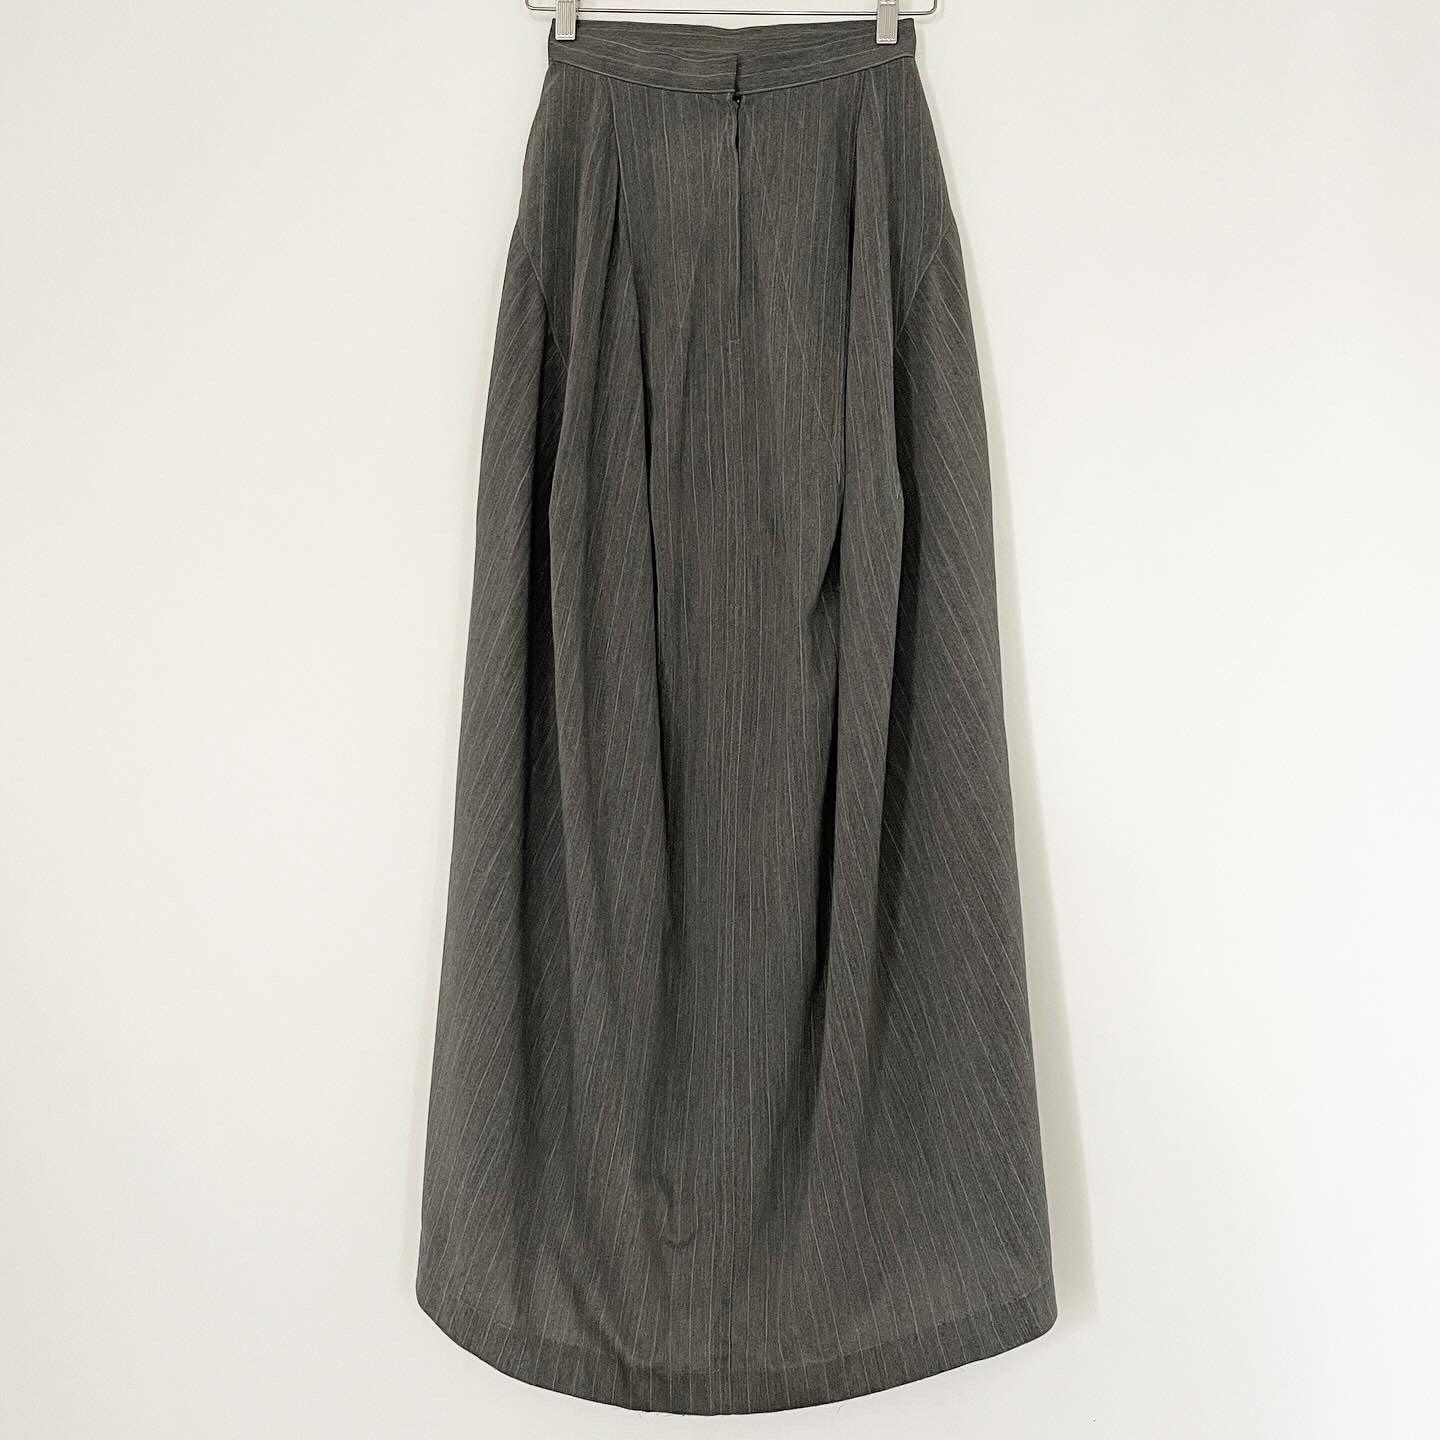 YOHJI YAMAMOTO - YOHJI YAMAMOTO Vintage Skirt - AVVIIVVA.COM